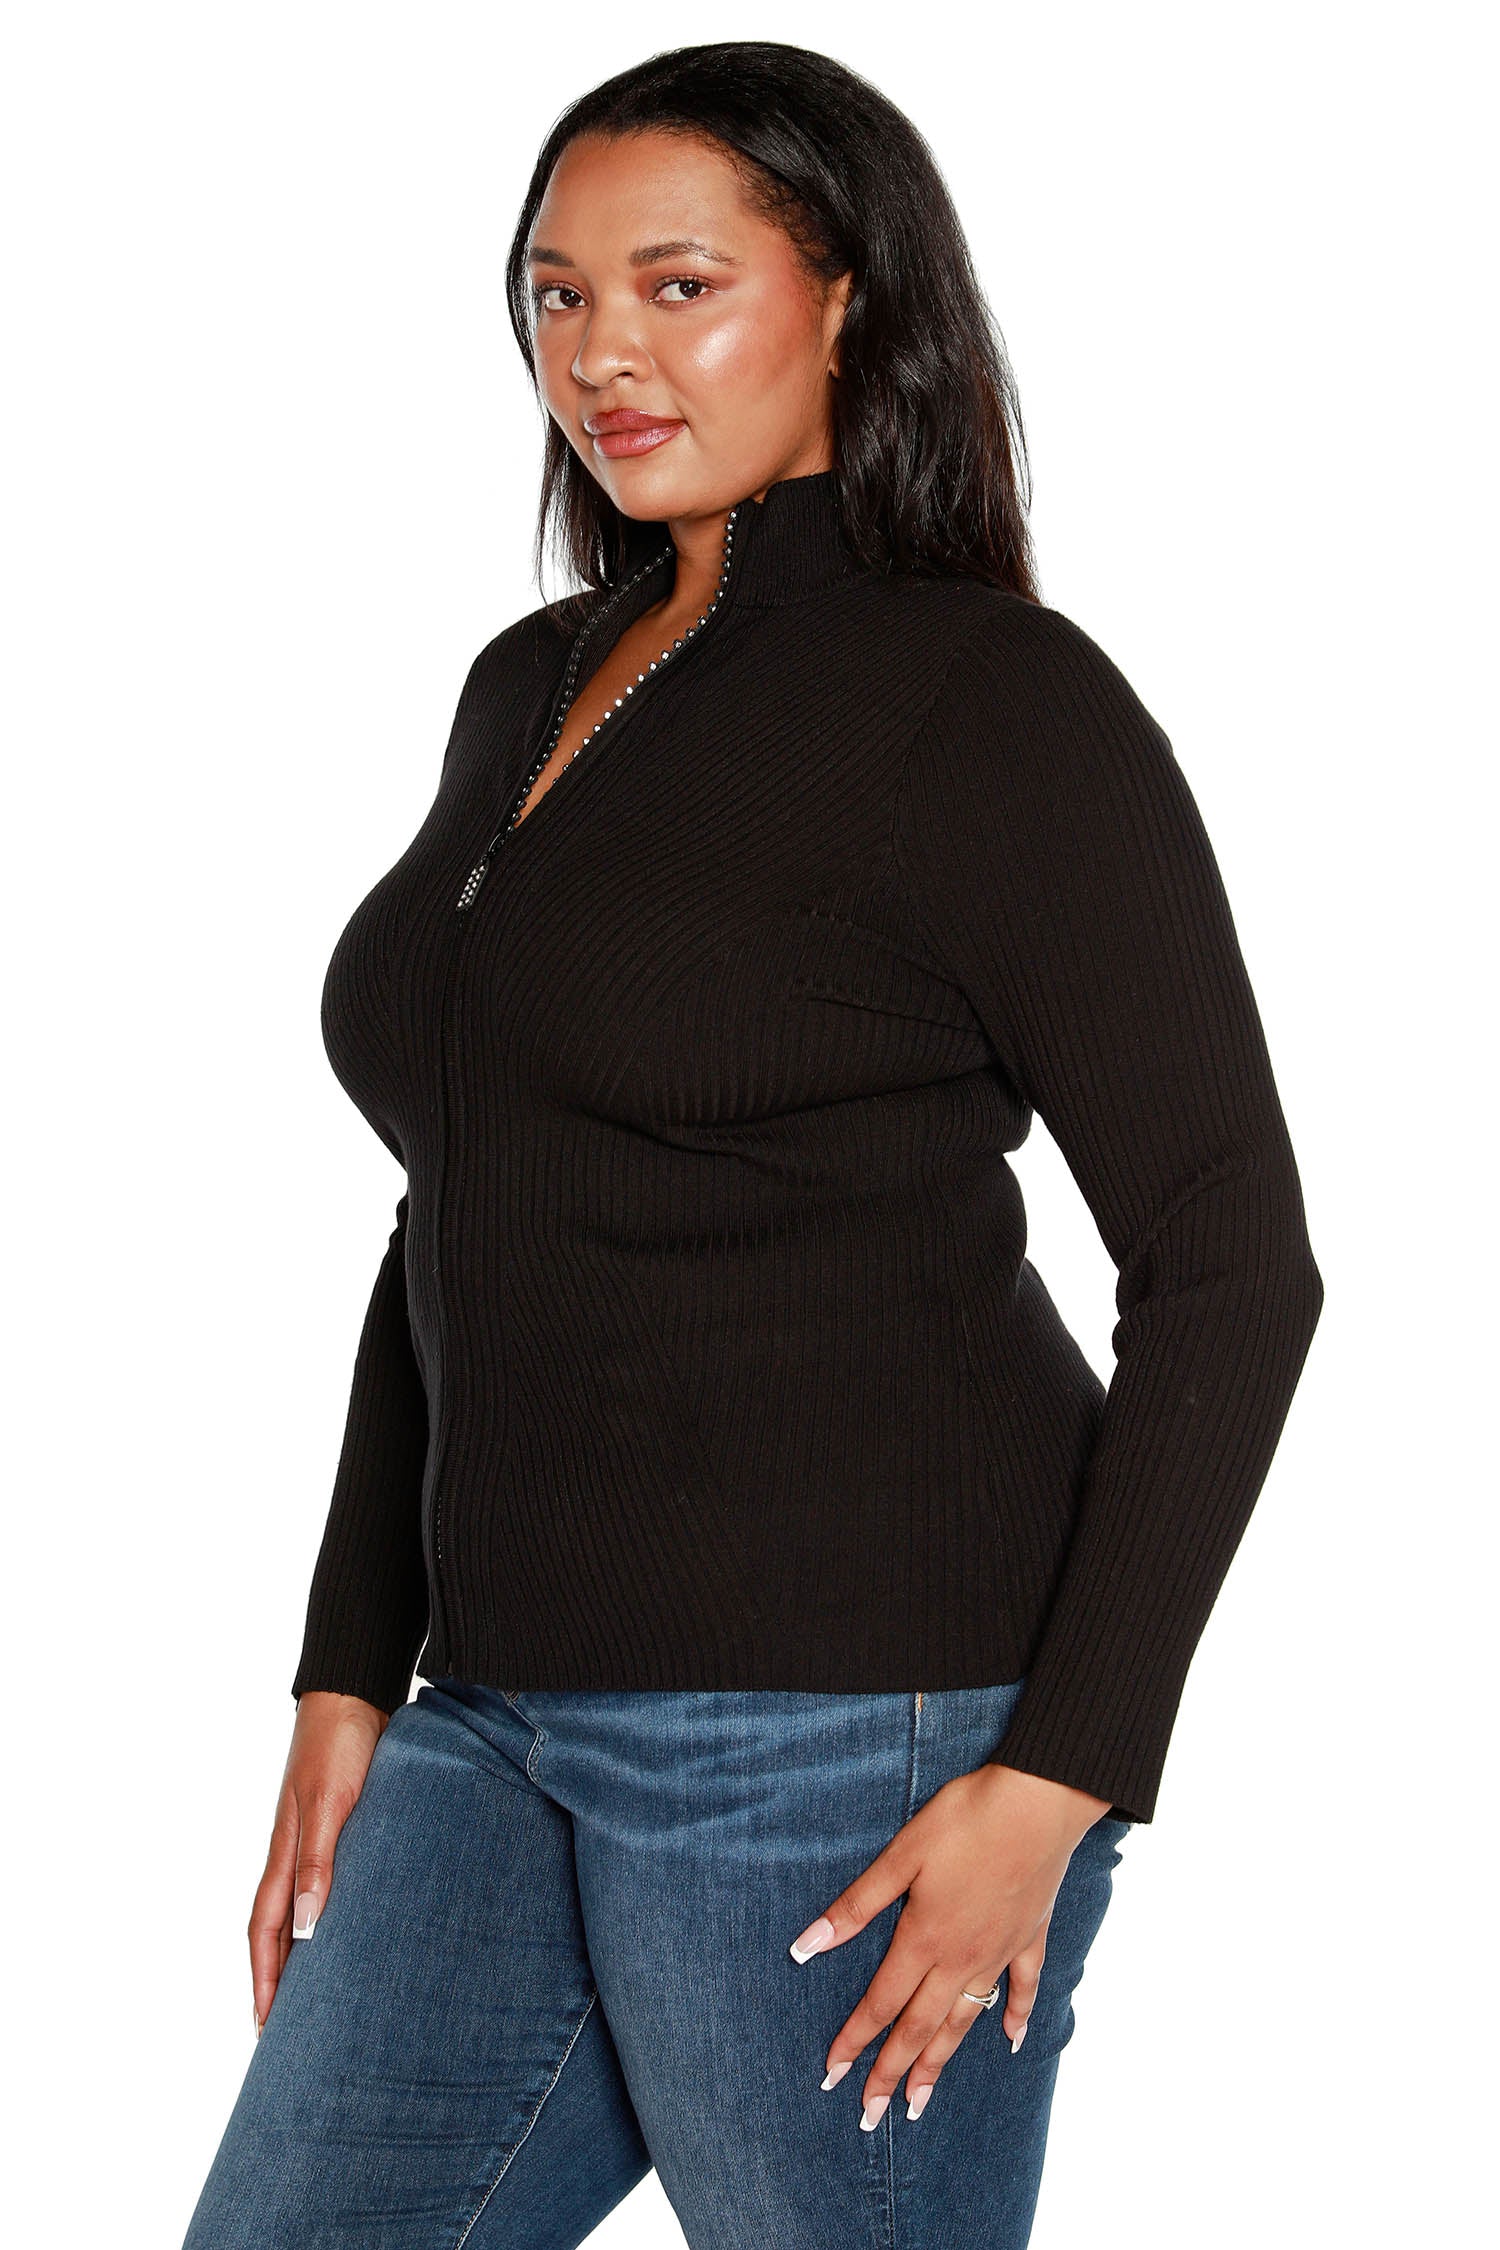 Women's Long Sleeve Mock Neck Ribbed Sweater with Diamond Zipper | Curvy